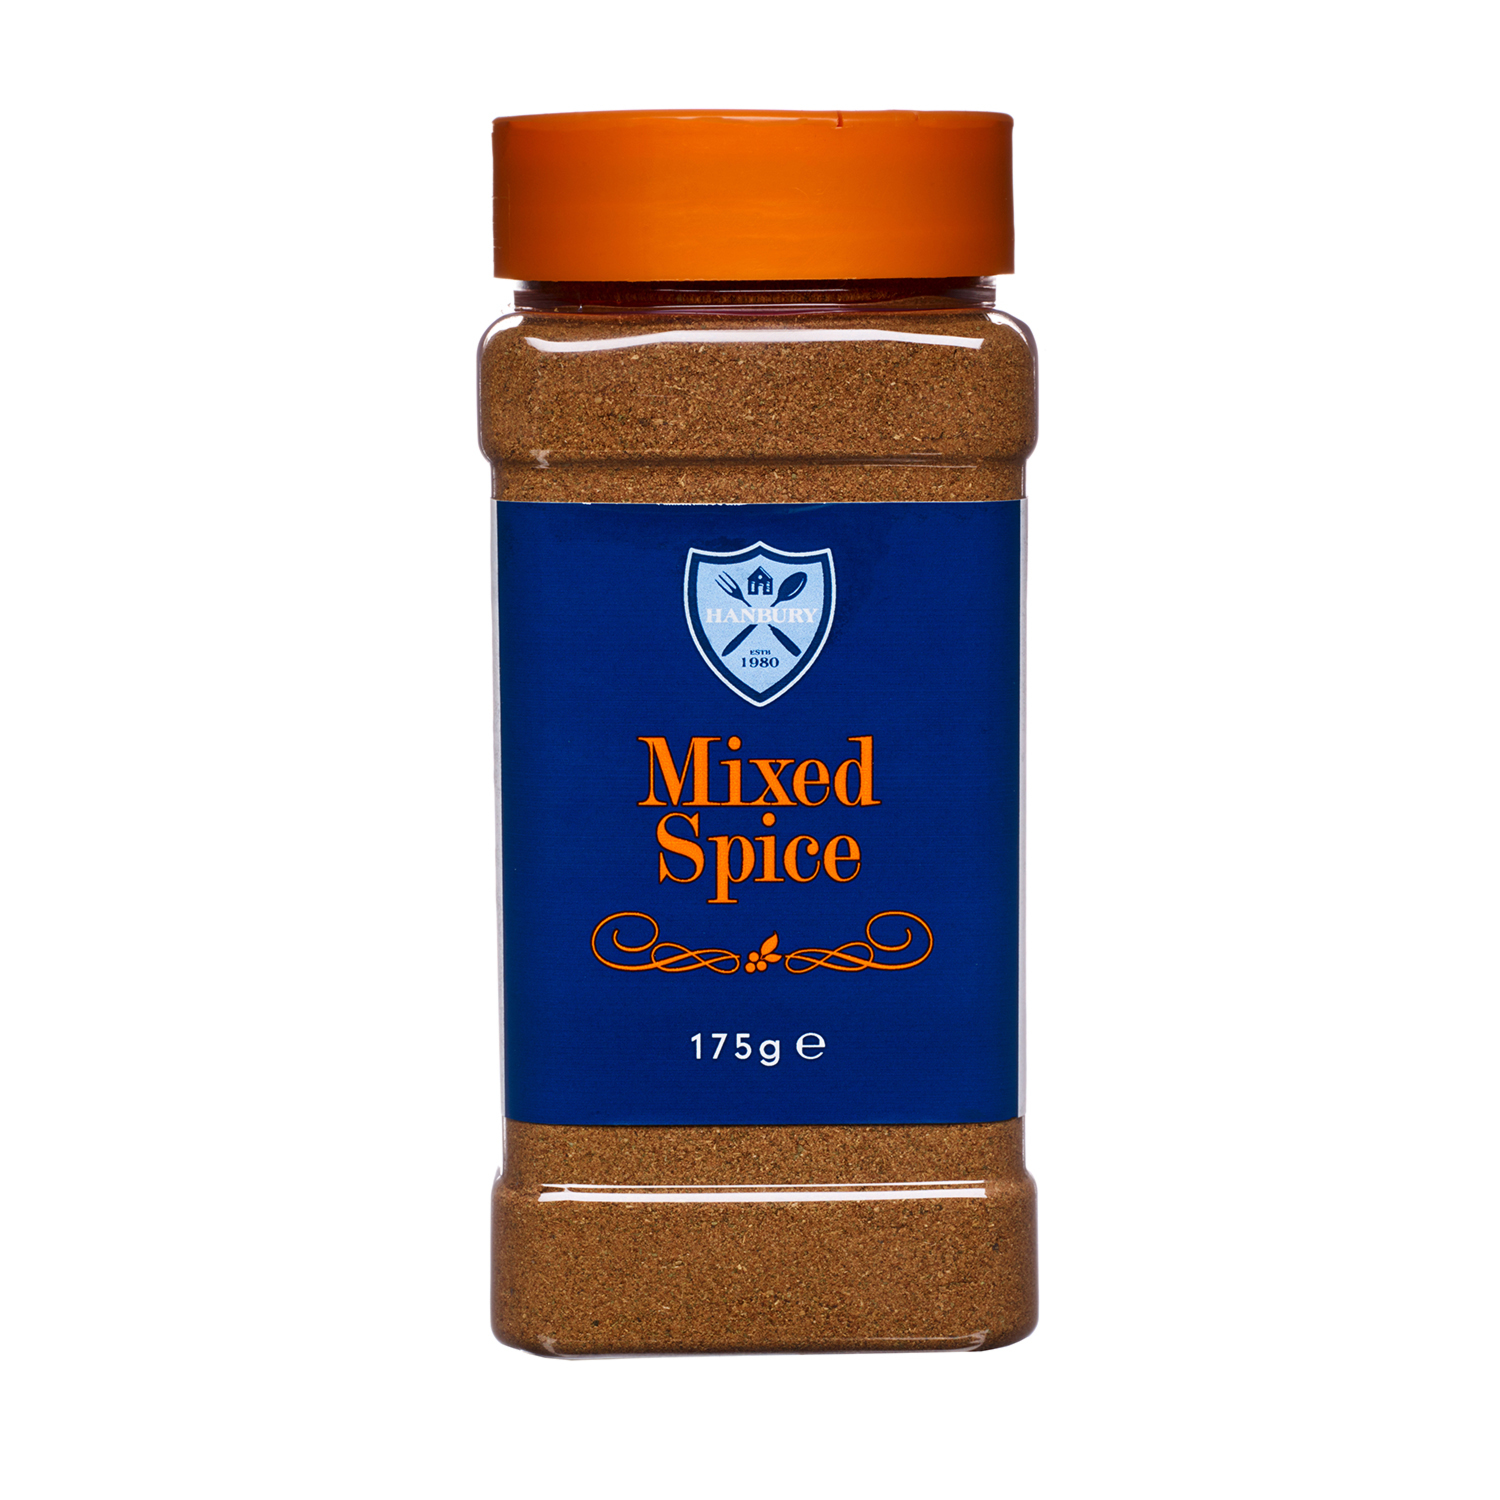 Mixed Spice Tub Image 1